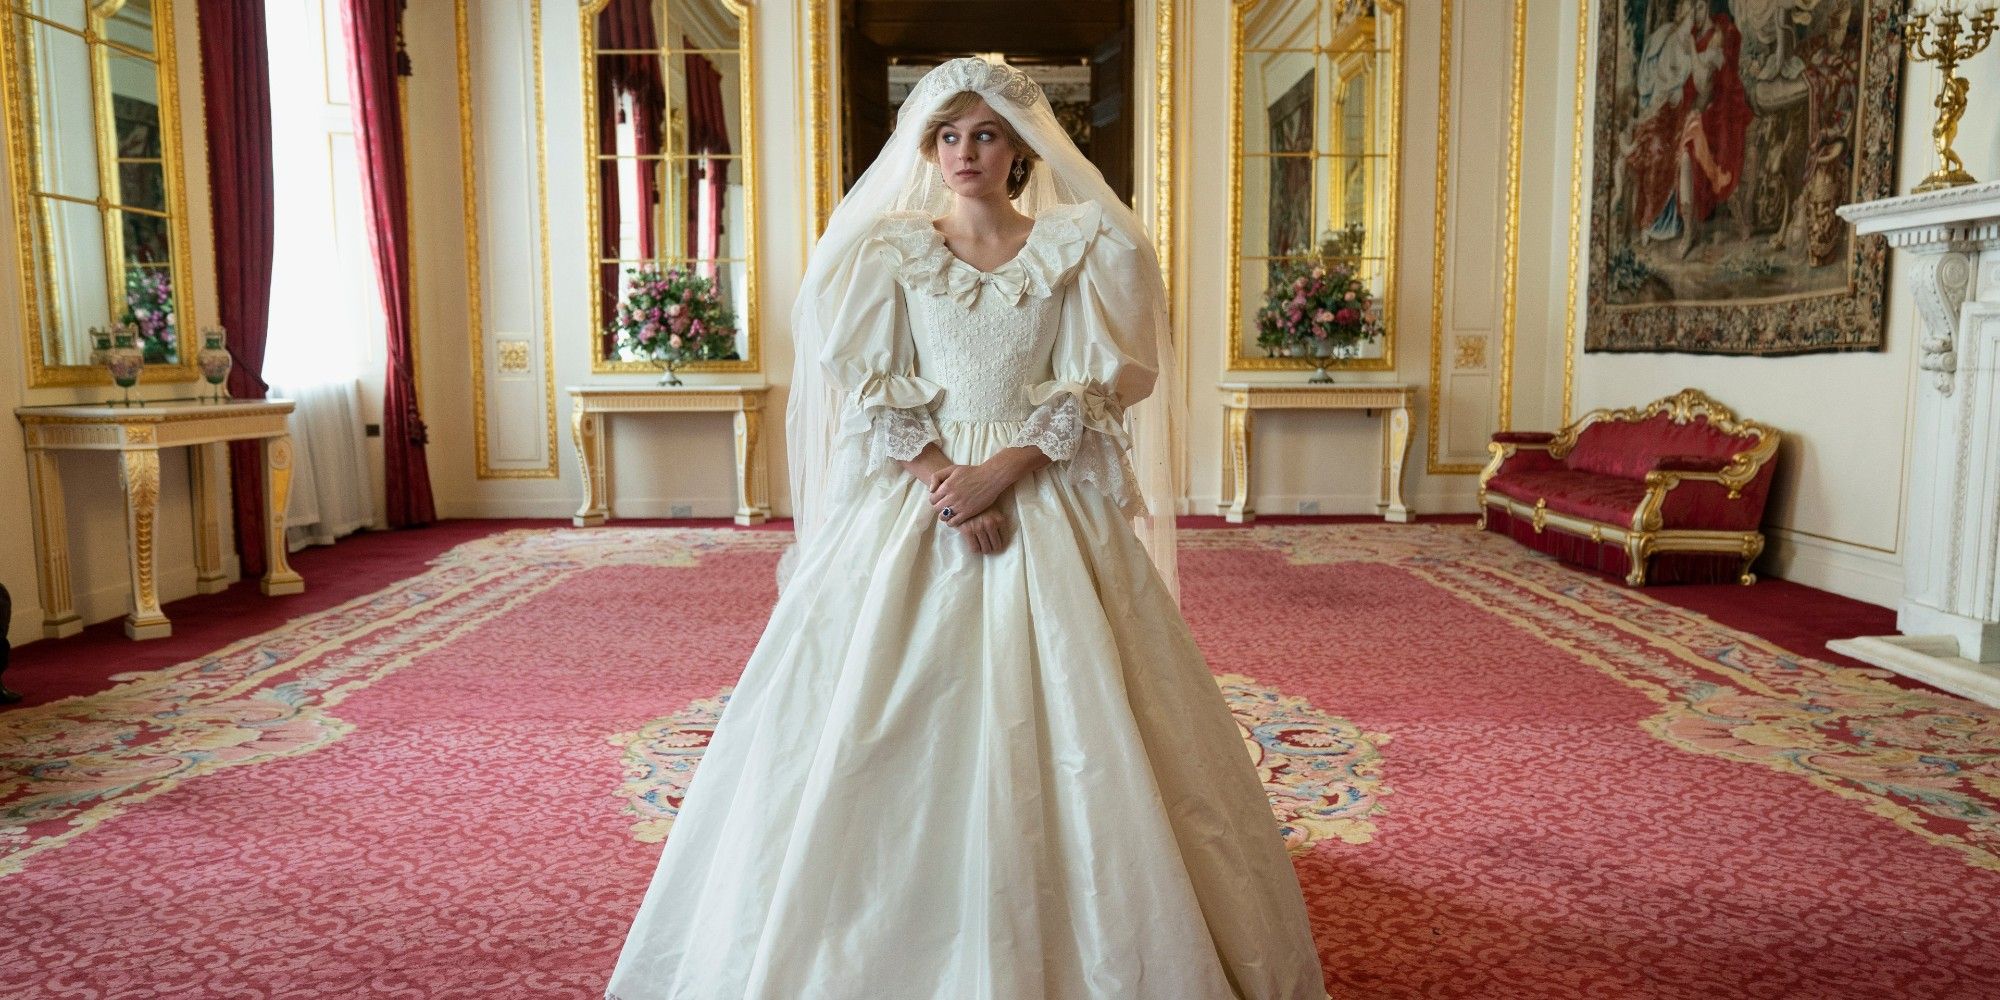 The Crown Season 4 Photo Shows Off Princess Diana’s Wedding Dress